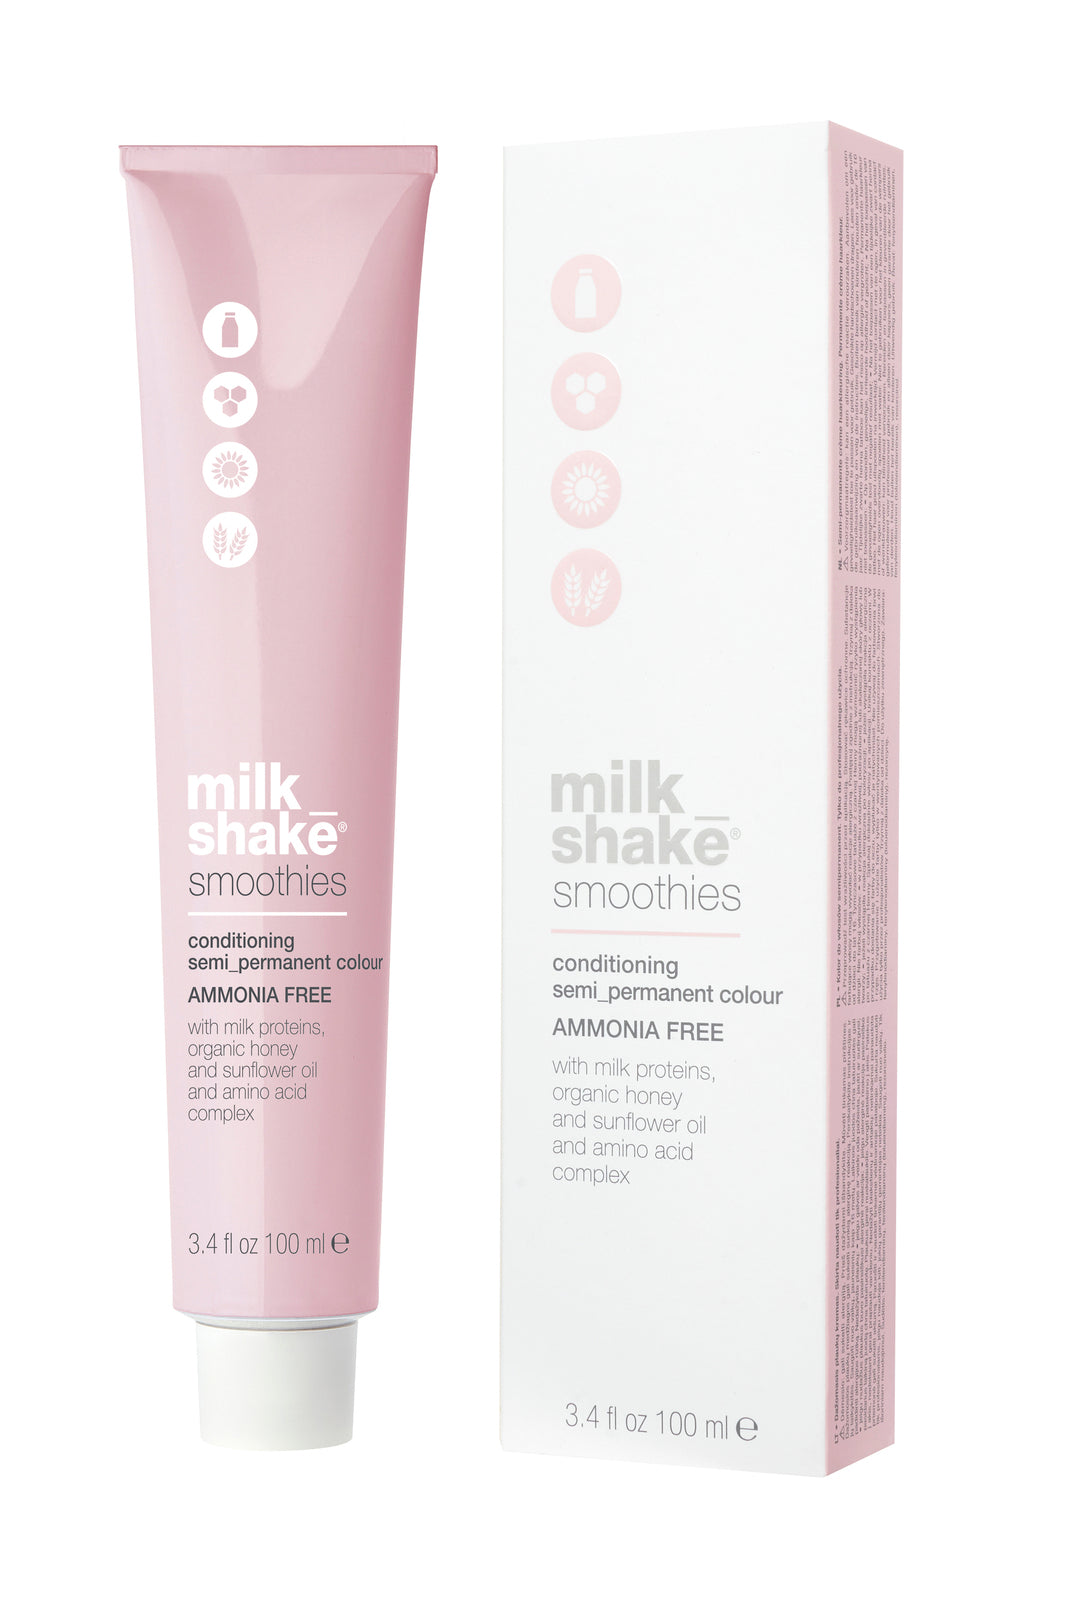 Milkshake smoothies semi-permanent color 5.6